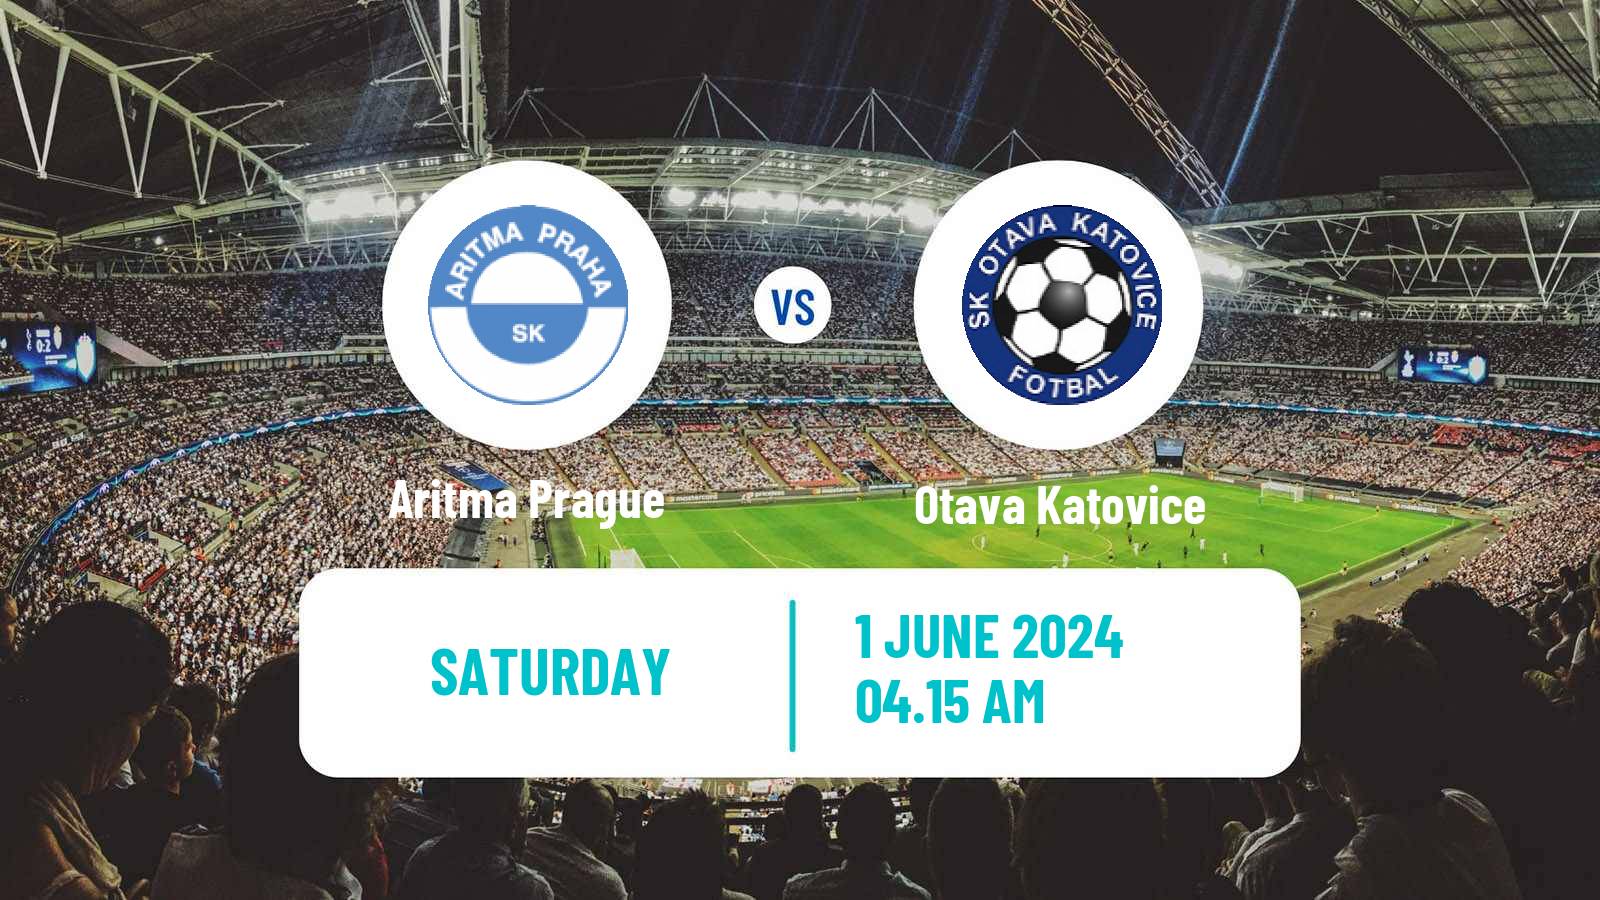 Soccer Czech Division A Aritma Prague - Otava Katovice